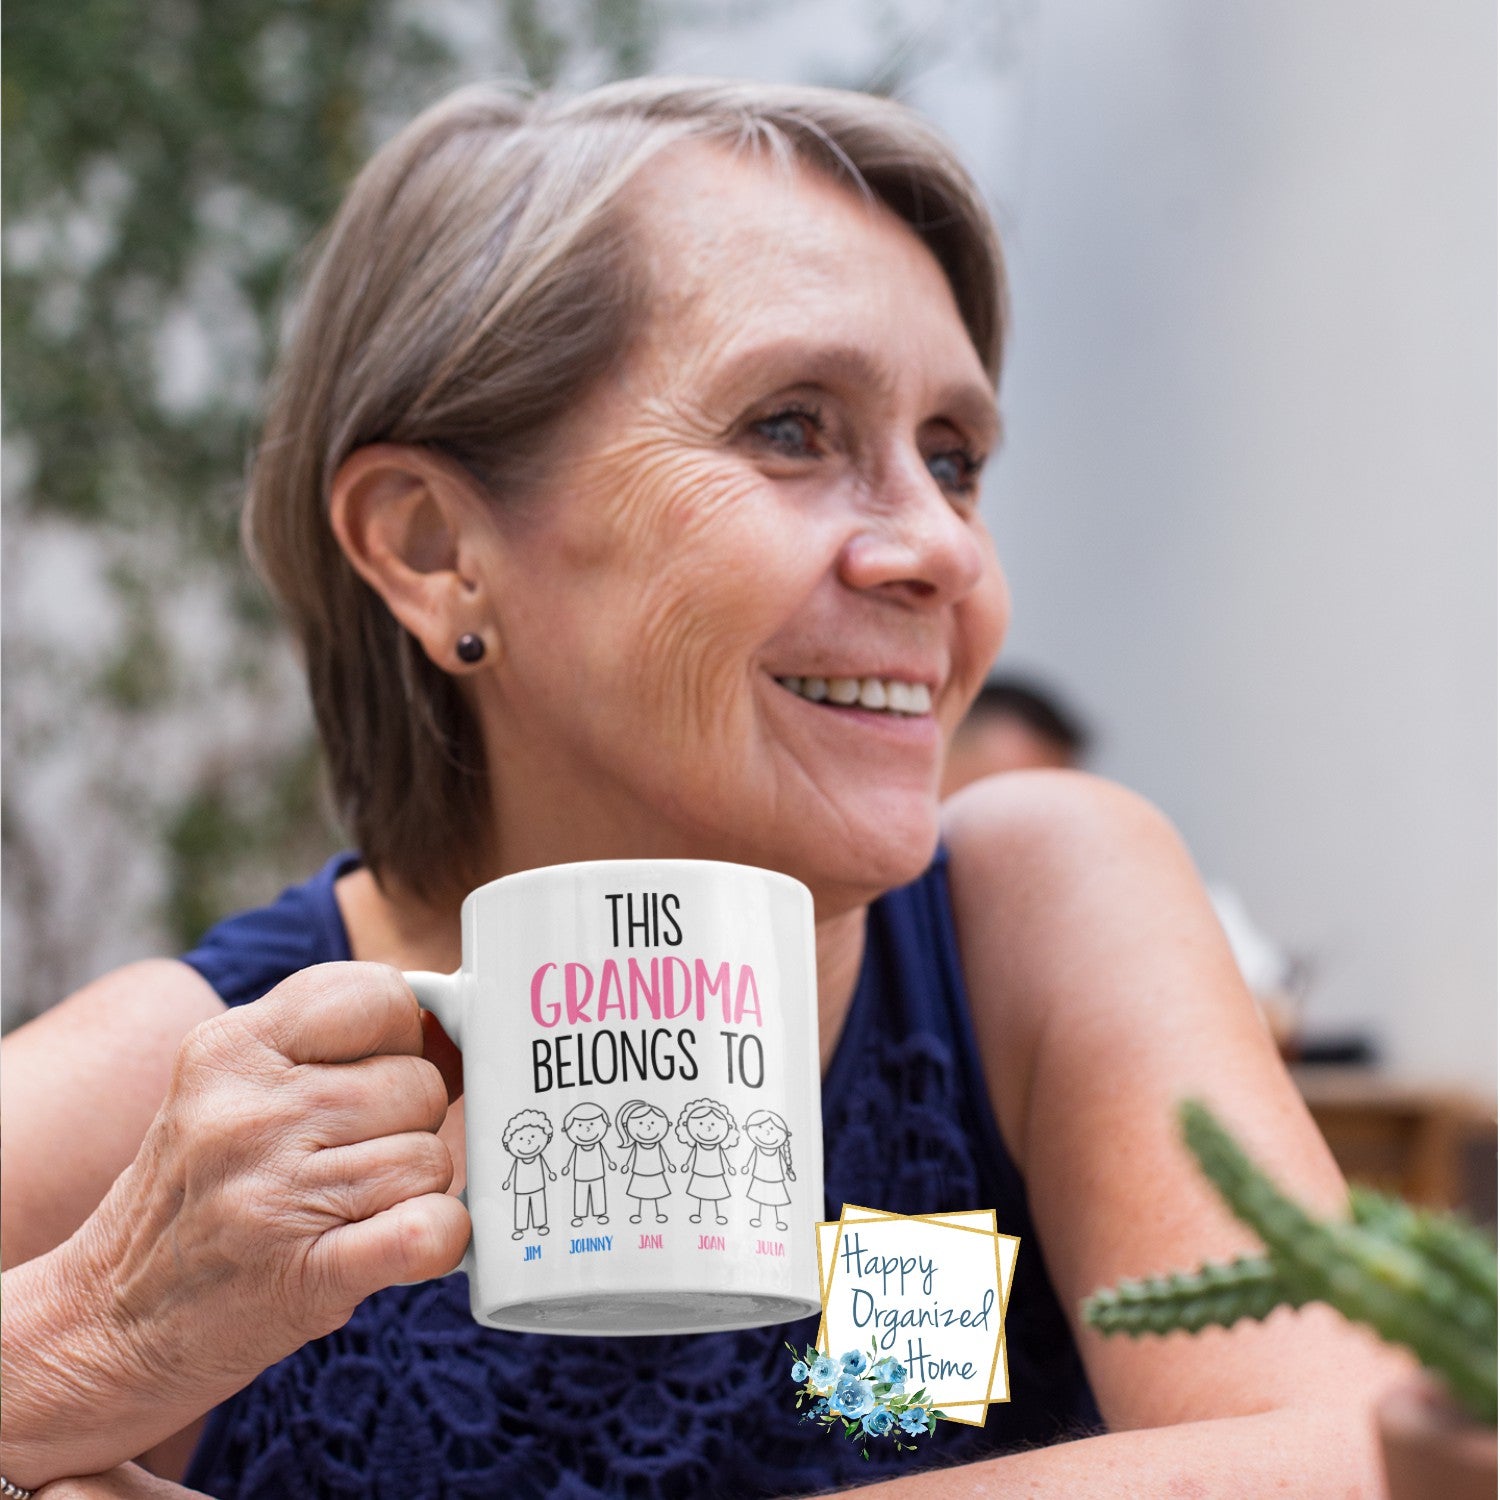 This Grandparent Belongs to Personalized Mugs - 14 Grand Children